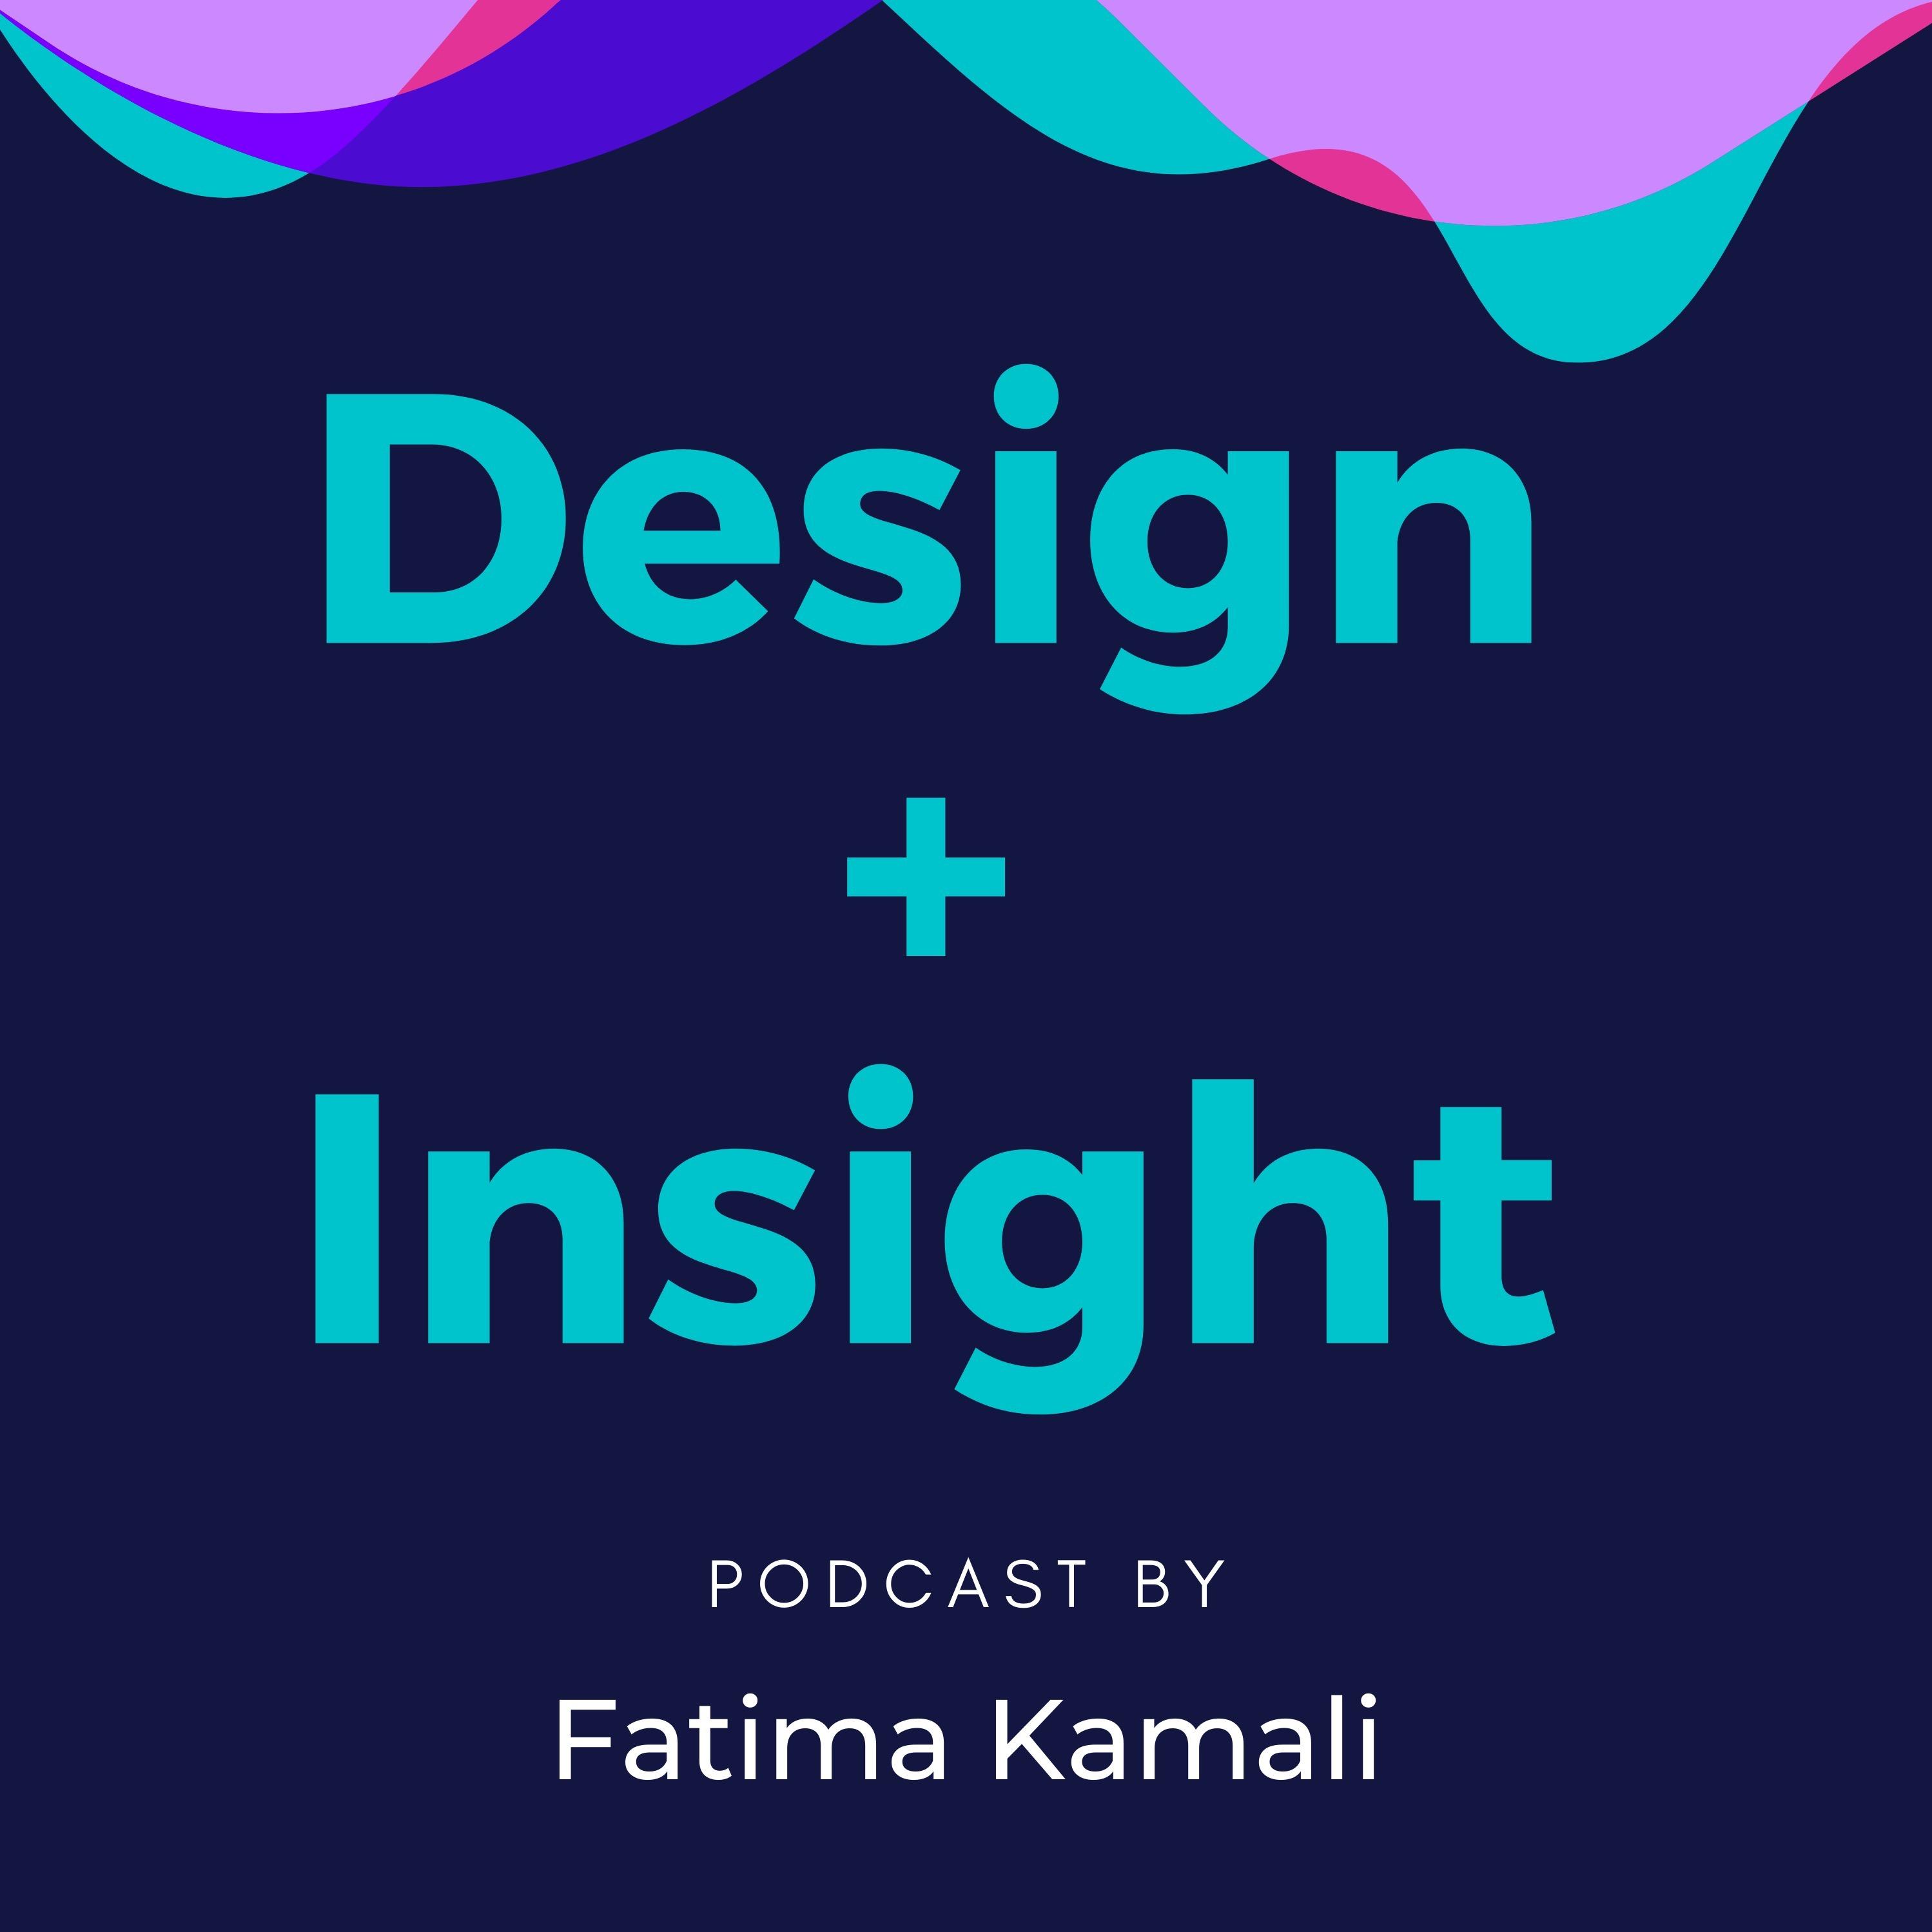 Design + Insight